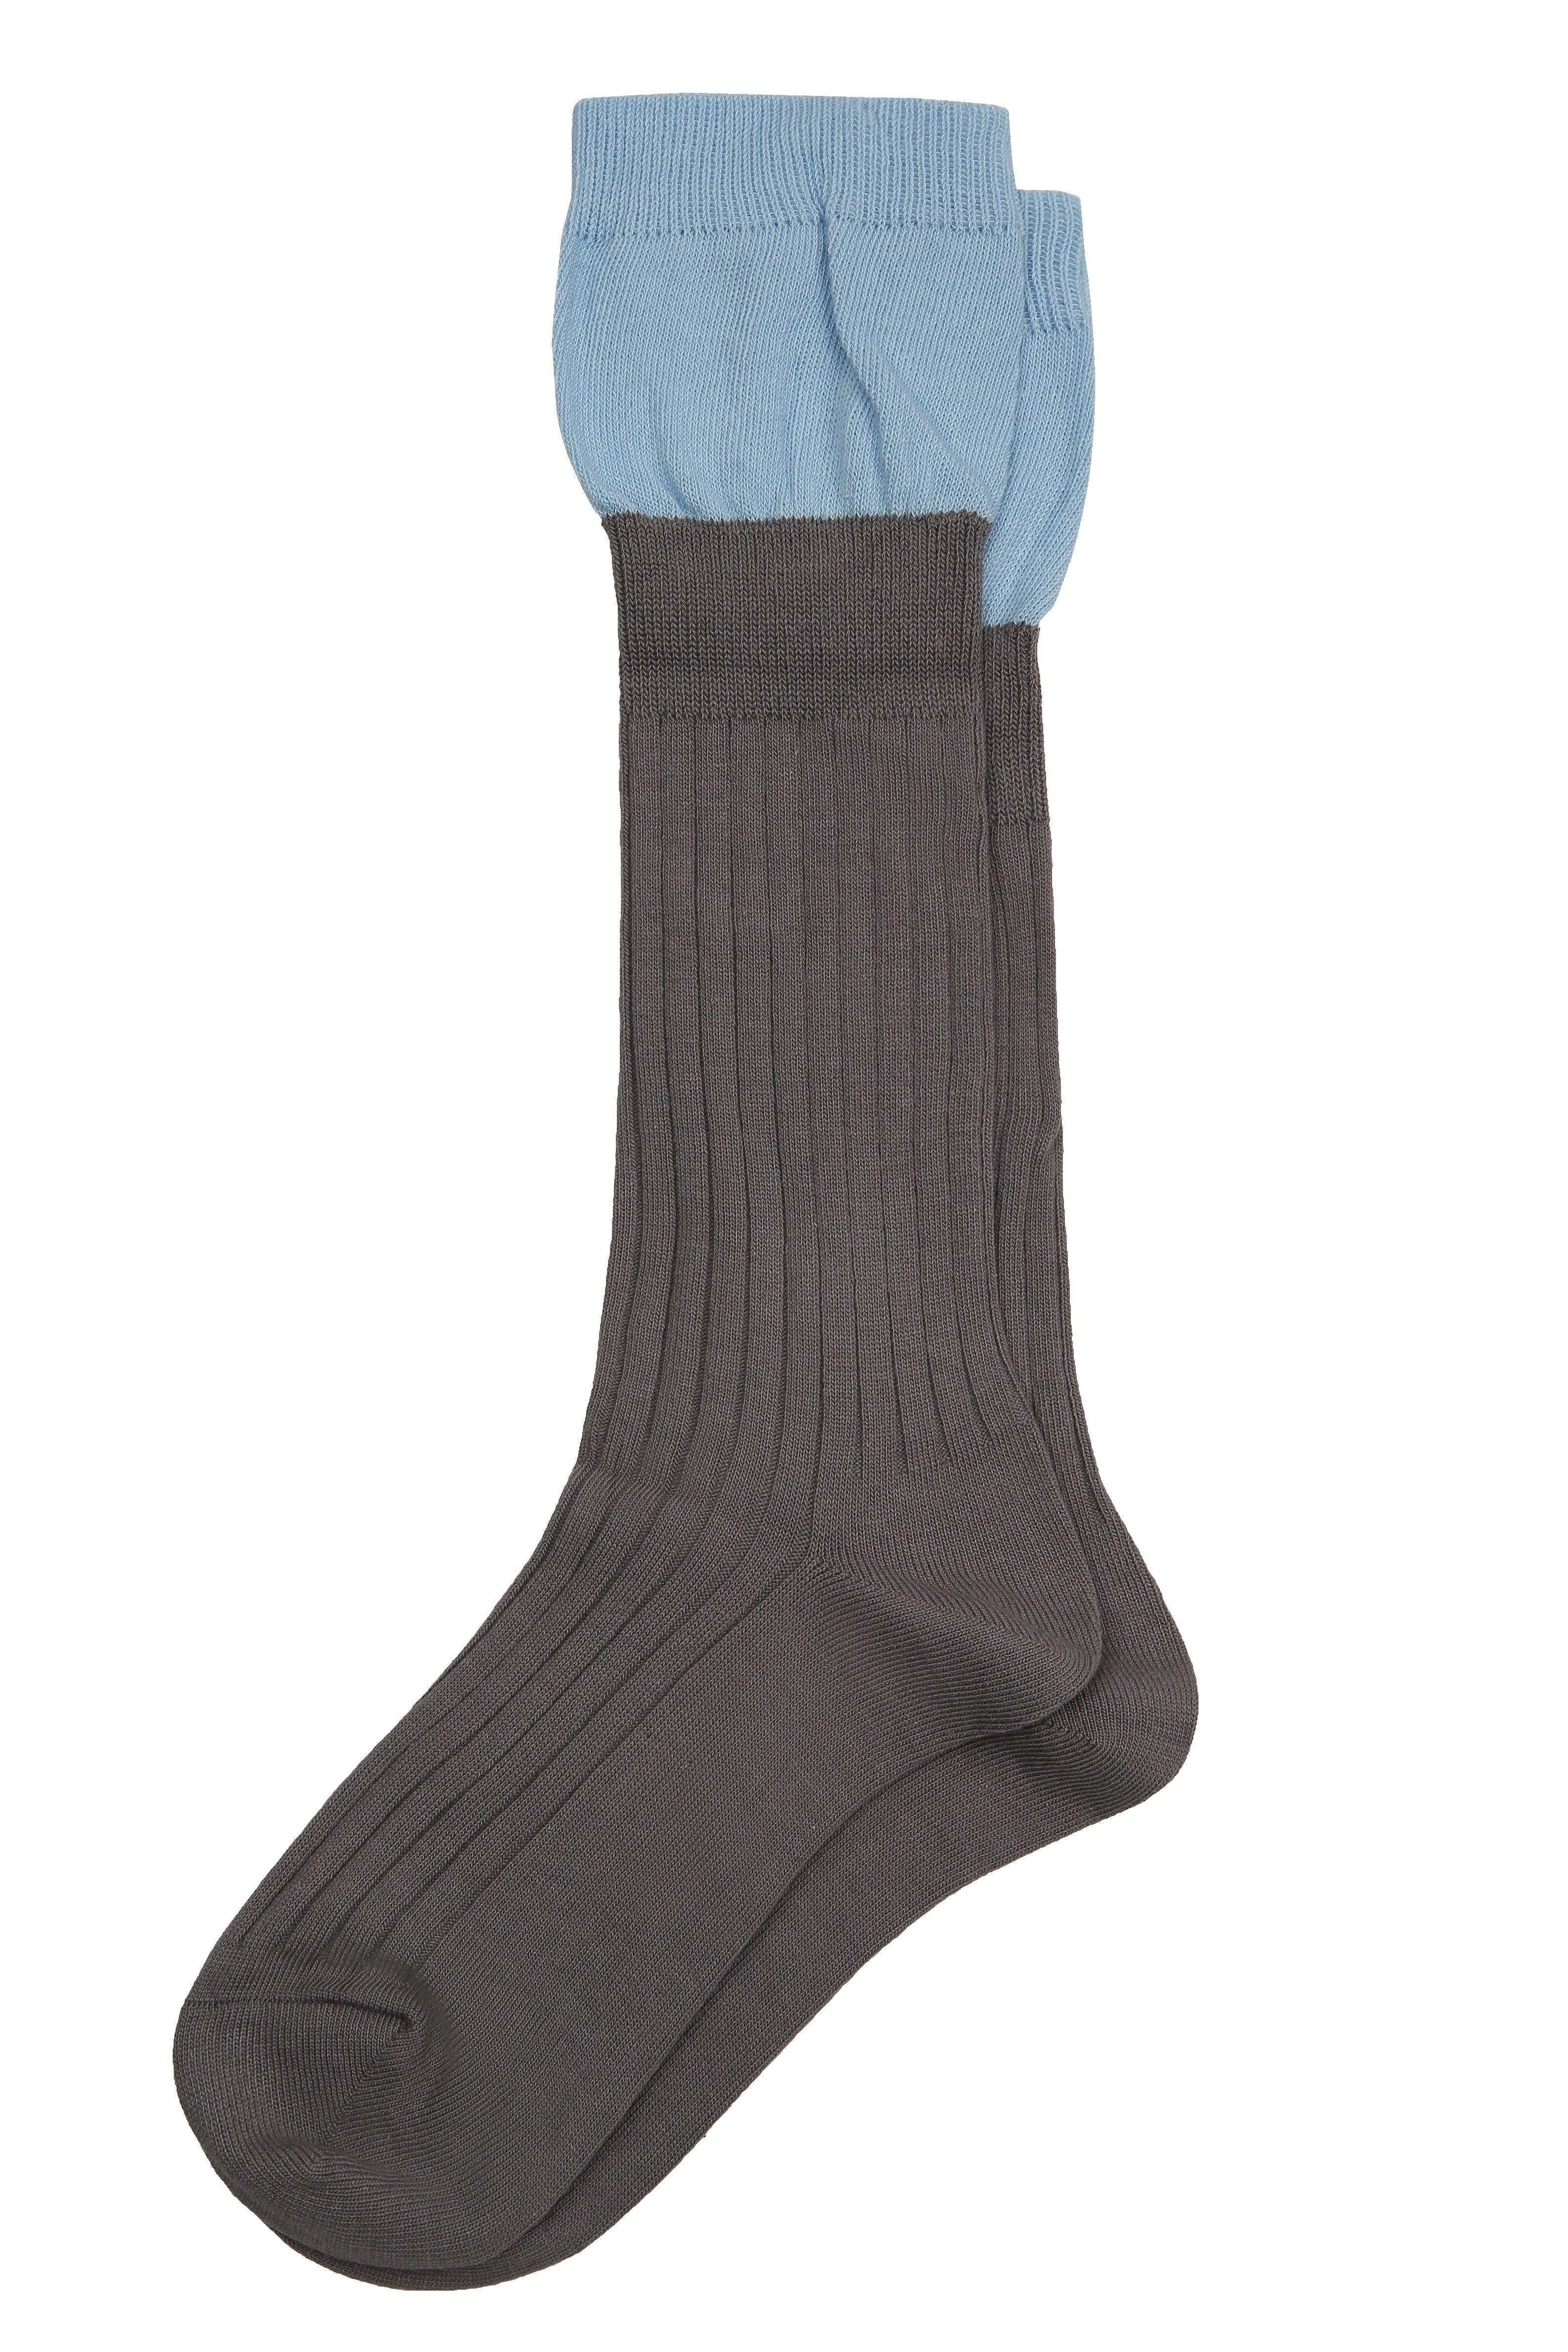 Blue Colorblocked Cotton Long Socks - Uniqvibe